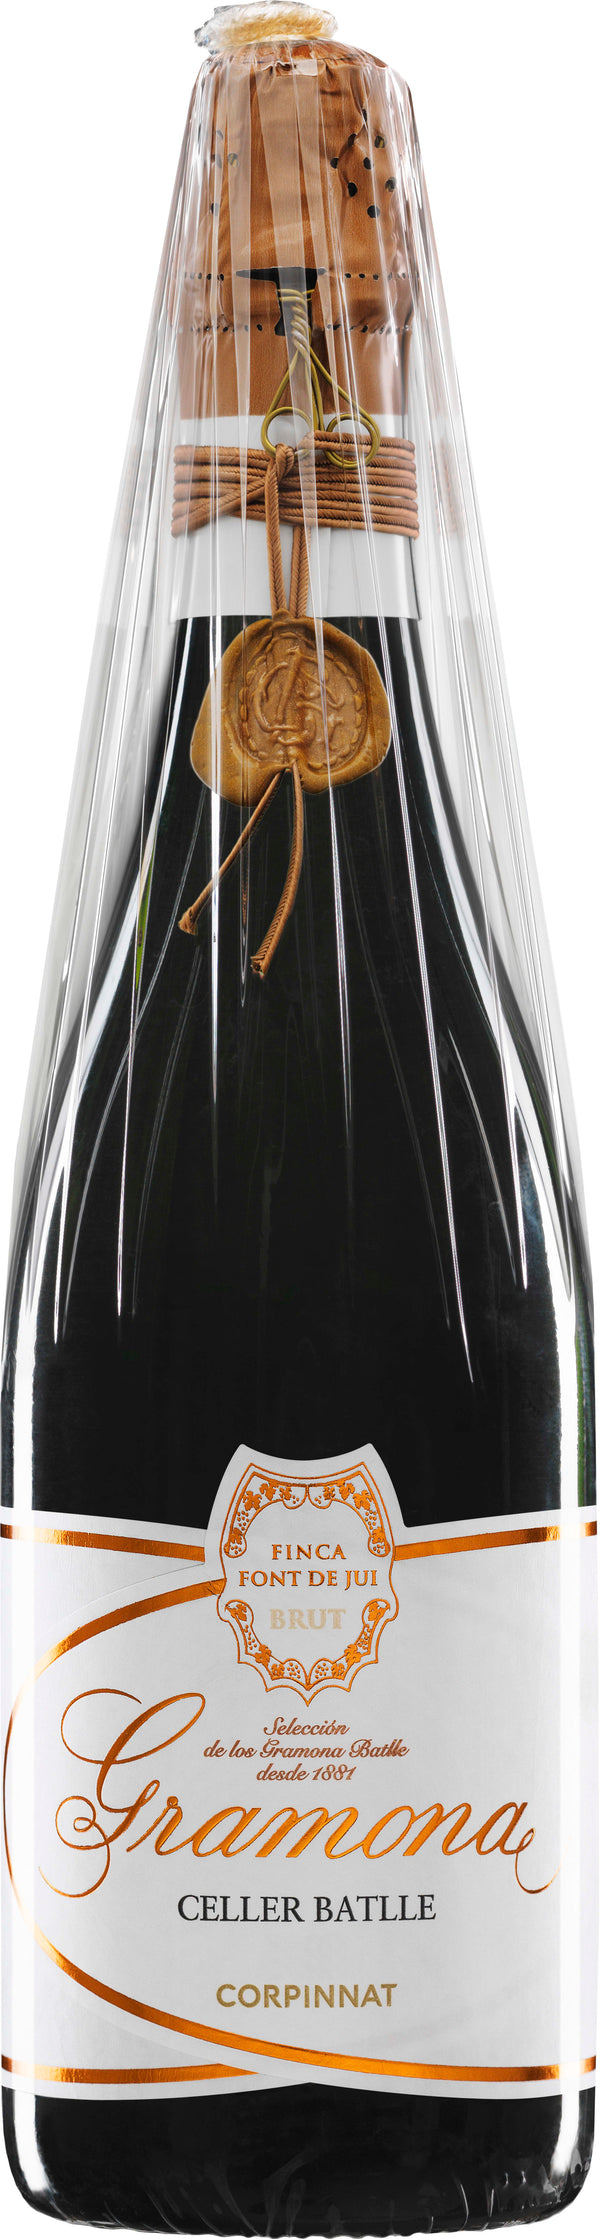 Gramona Celler Batlle Brut 2010 6x75cl - Just Wines 